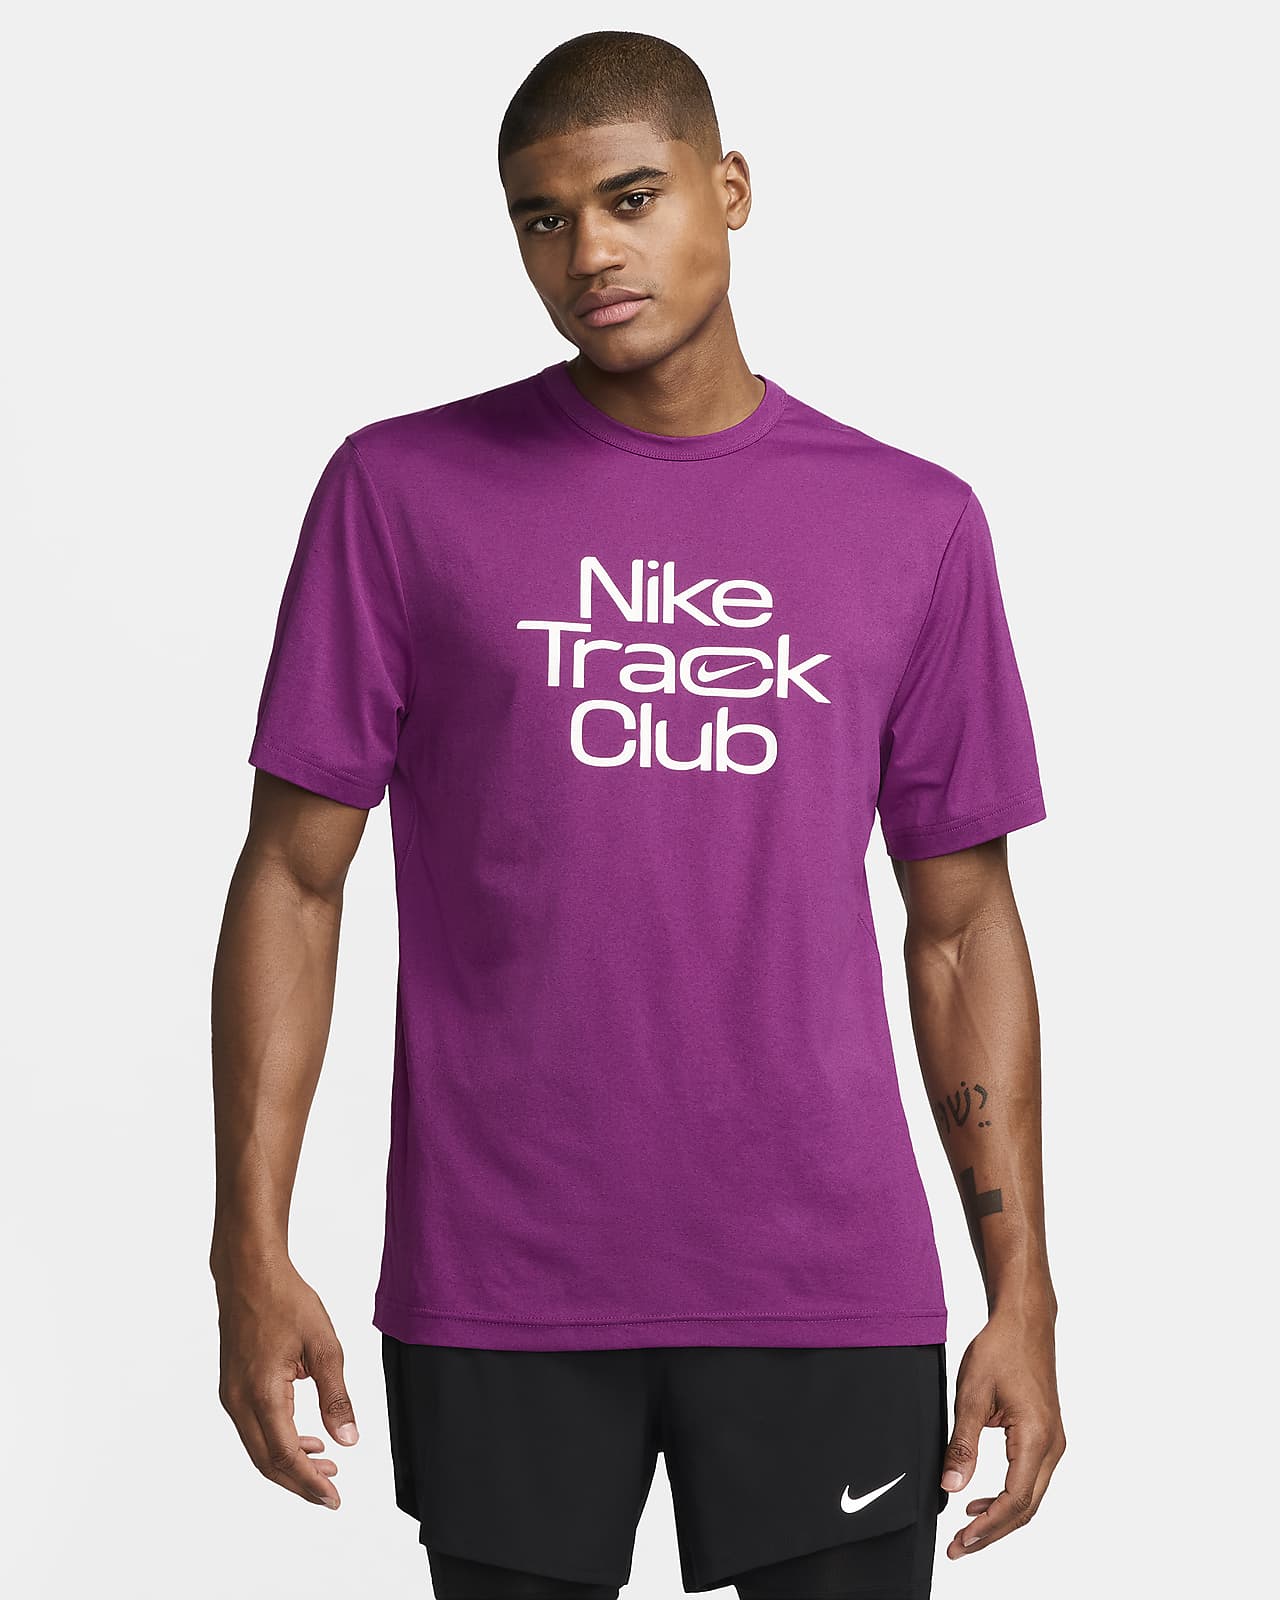 Nike Track Club hardlooptop met korte mouwen en Dri-FIT voor heren